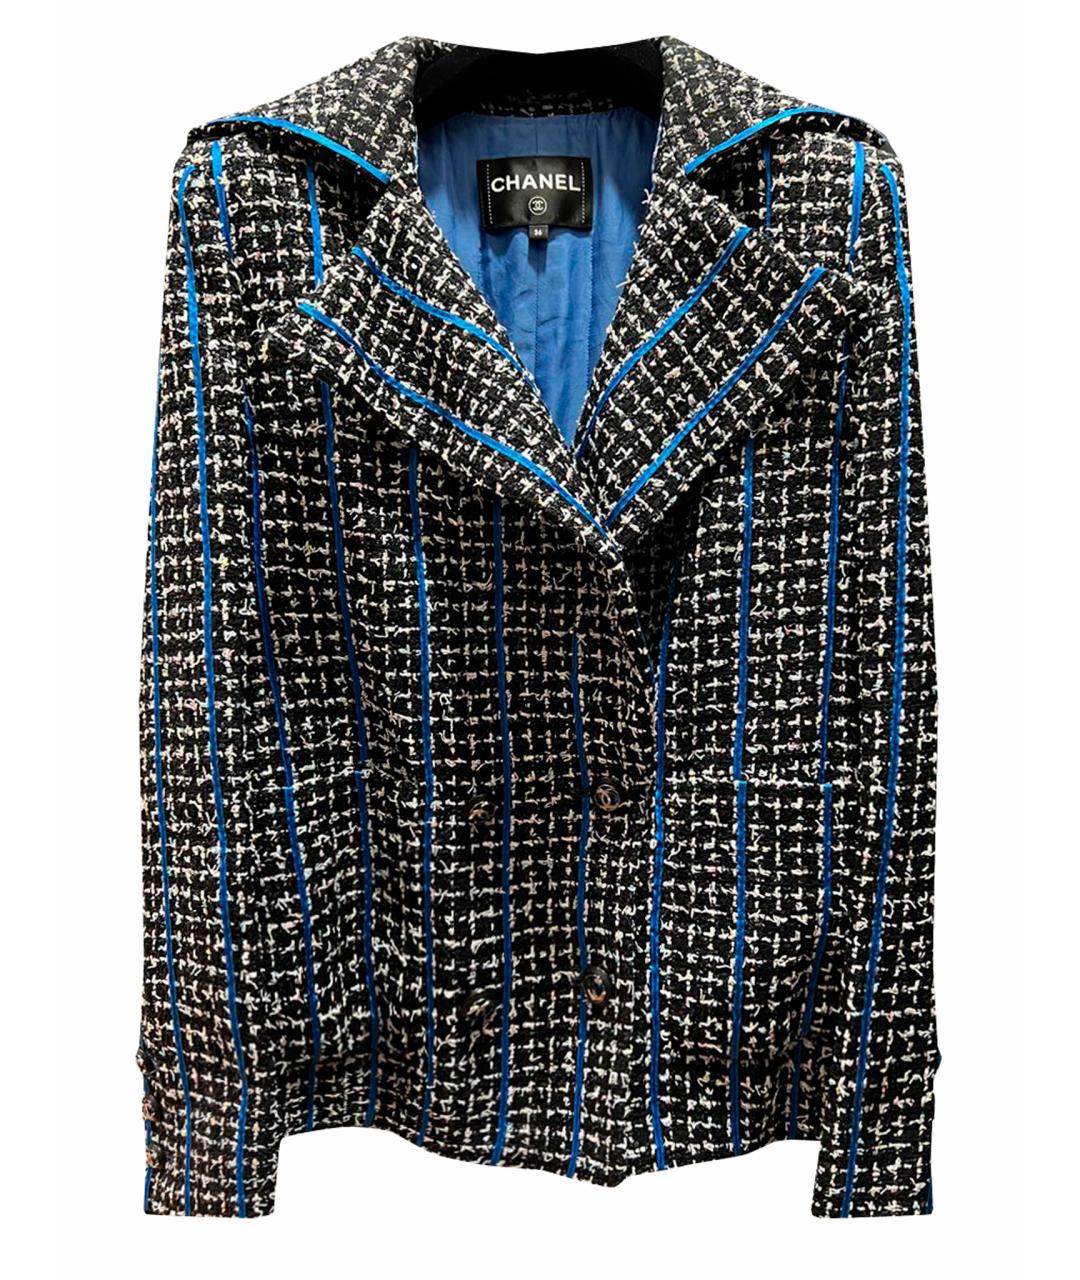 CHANEL PRE-OWNED Синий твидовый жакет/пиджак, фото 1